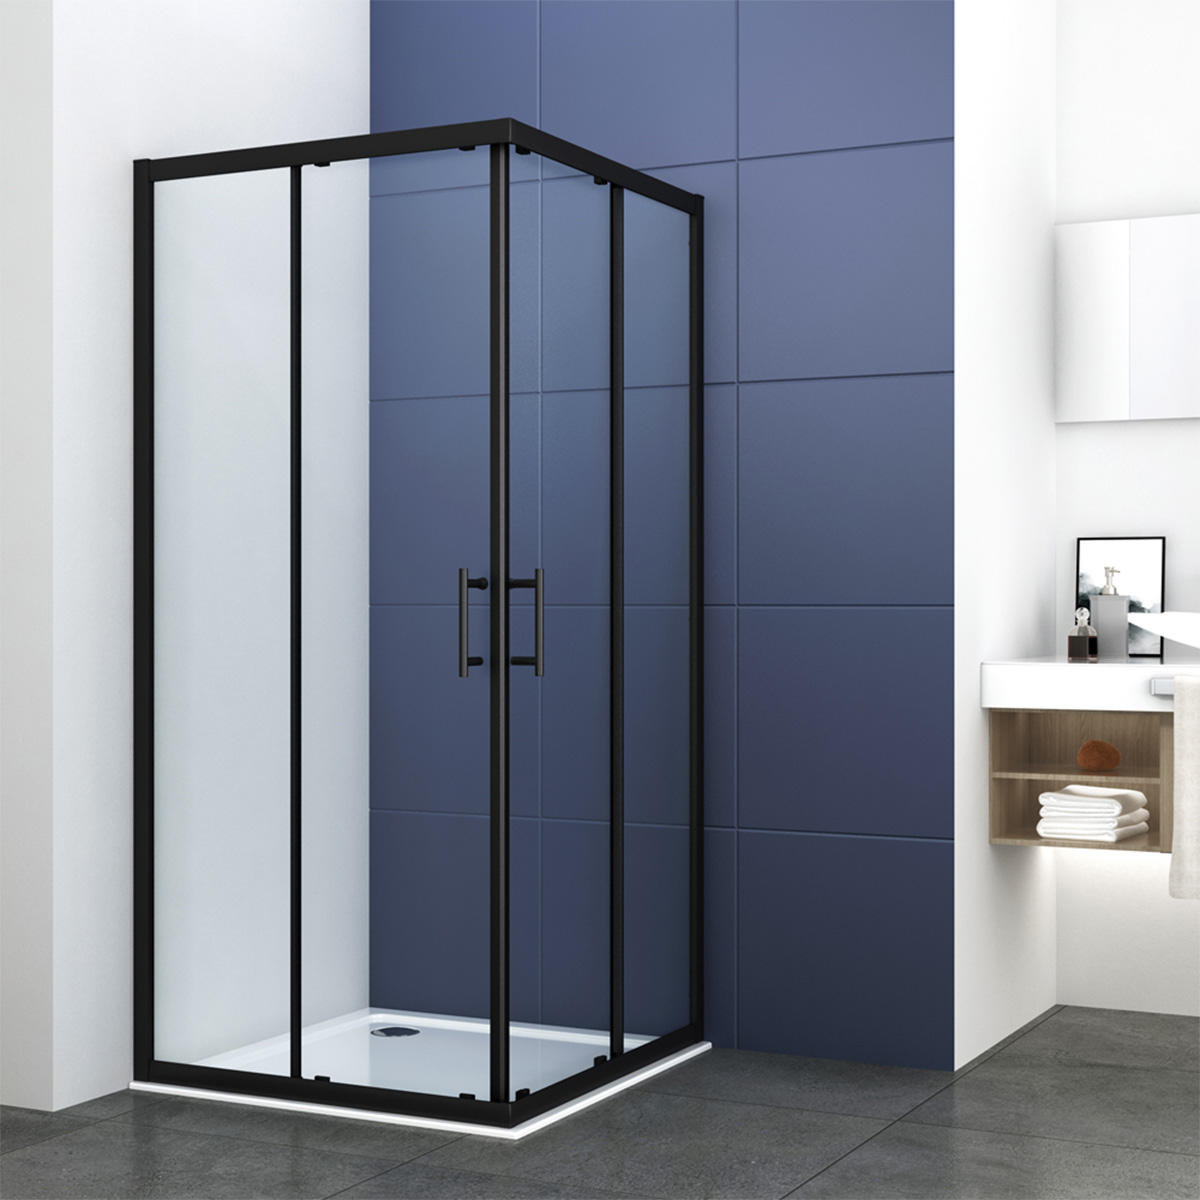 Kiimat Six 900mm Corner Entry Shower Enclosure - Black (20412)